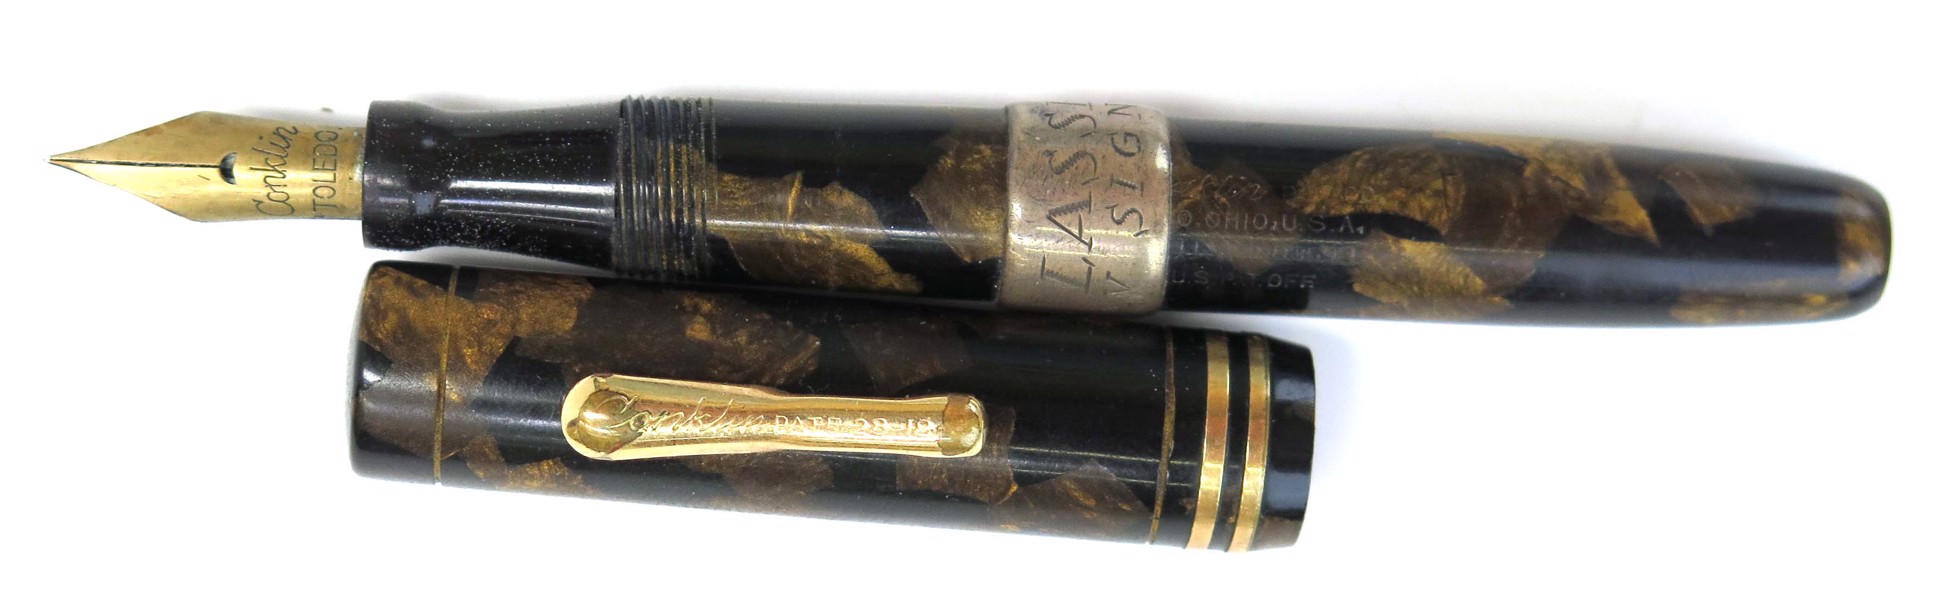 Reservoirpenna, bakelit och förgylld metall, Conklin, 1920-30-tal, _1158a_8d82e337164f0ea_lg.jpeg